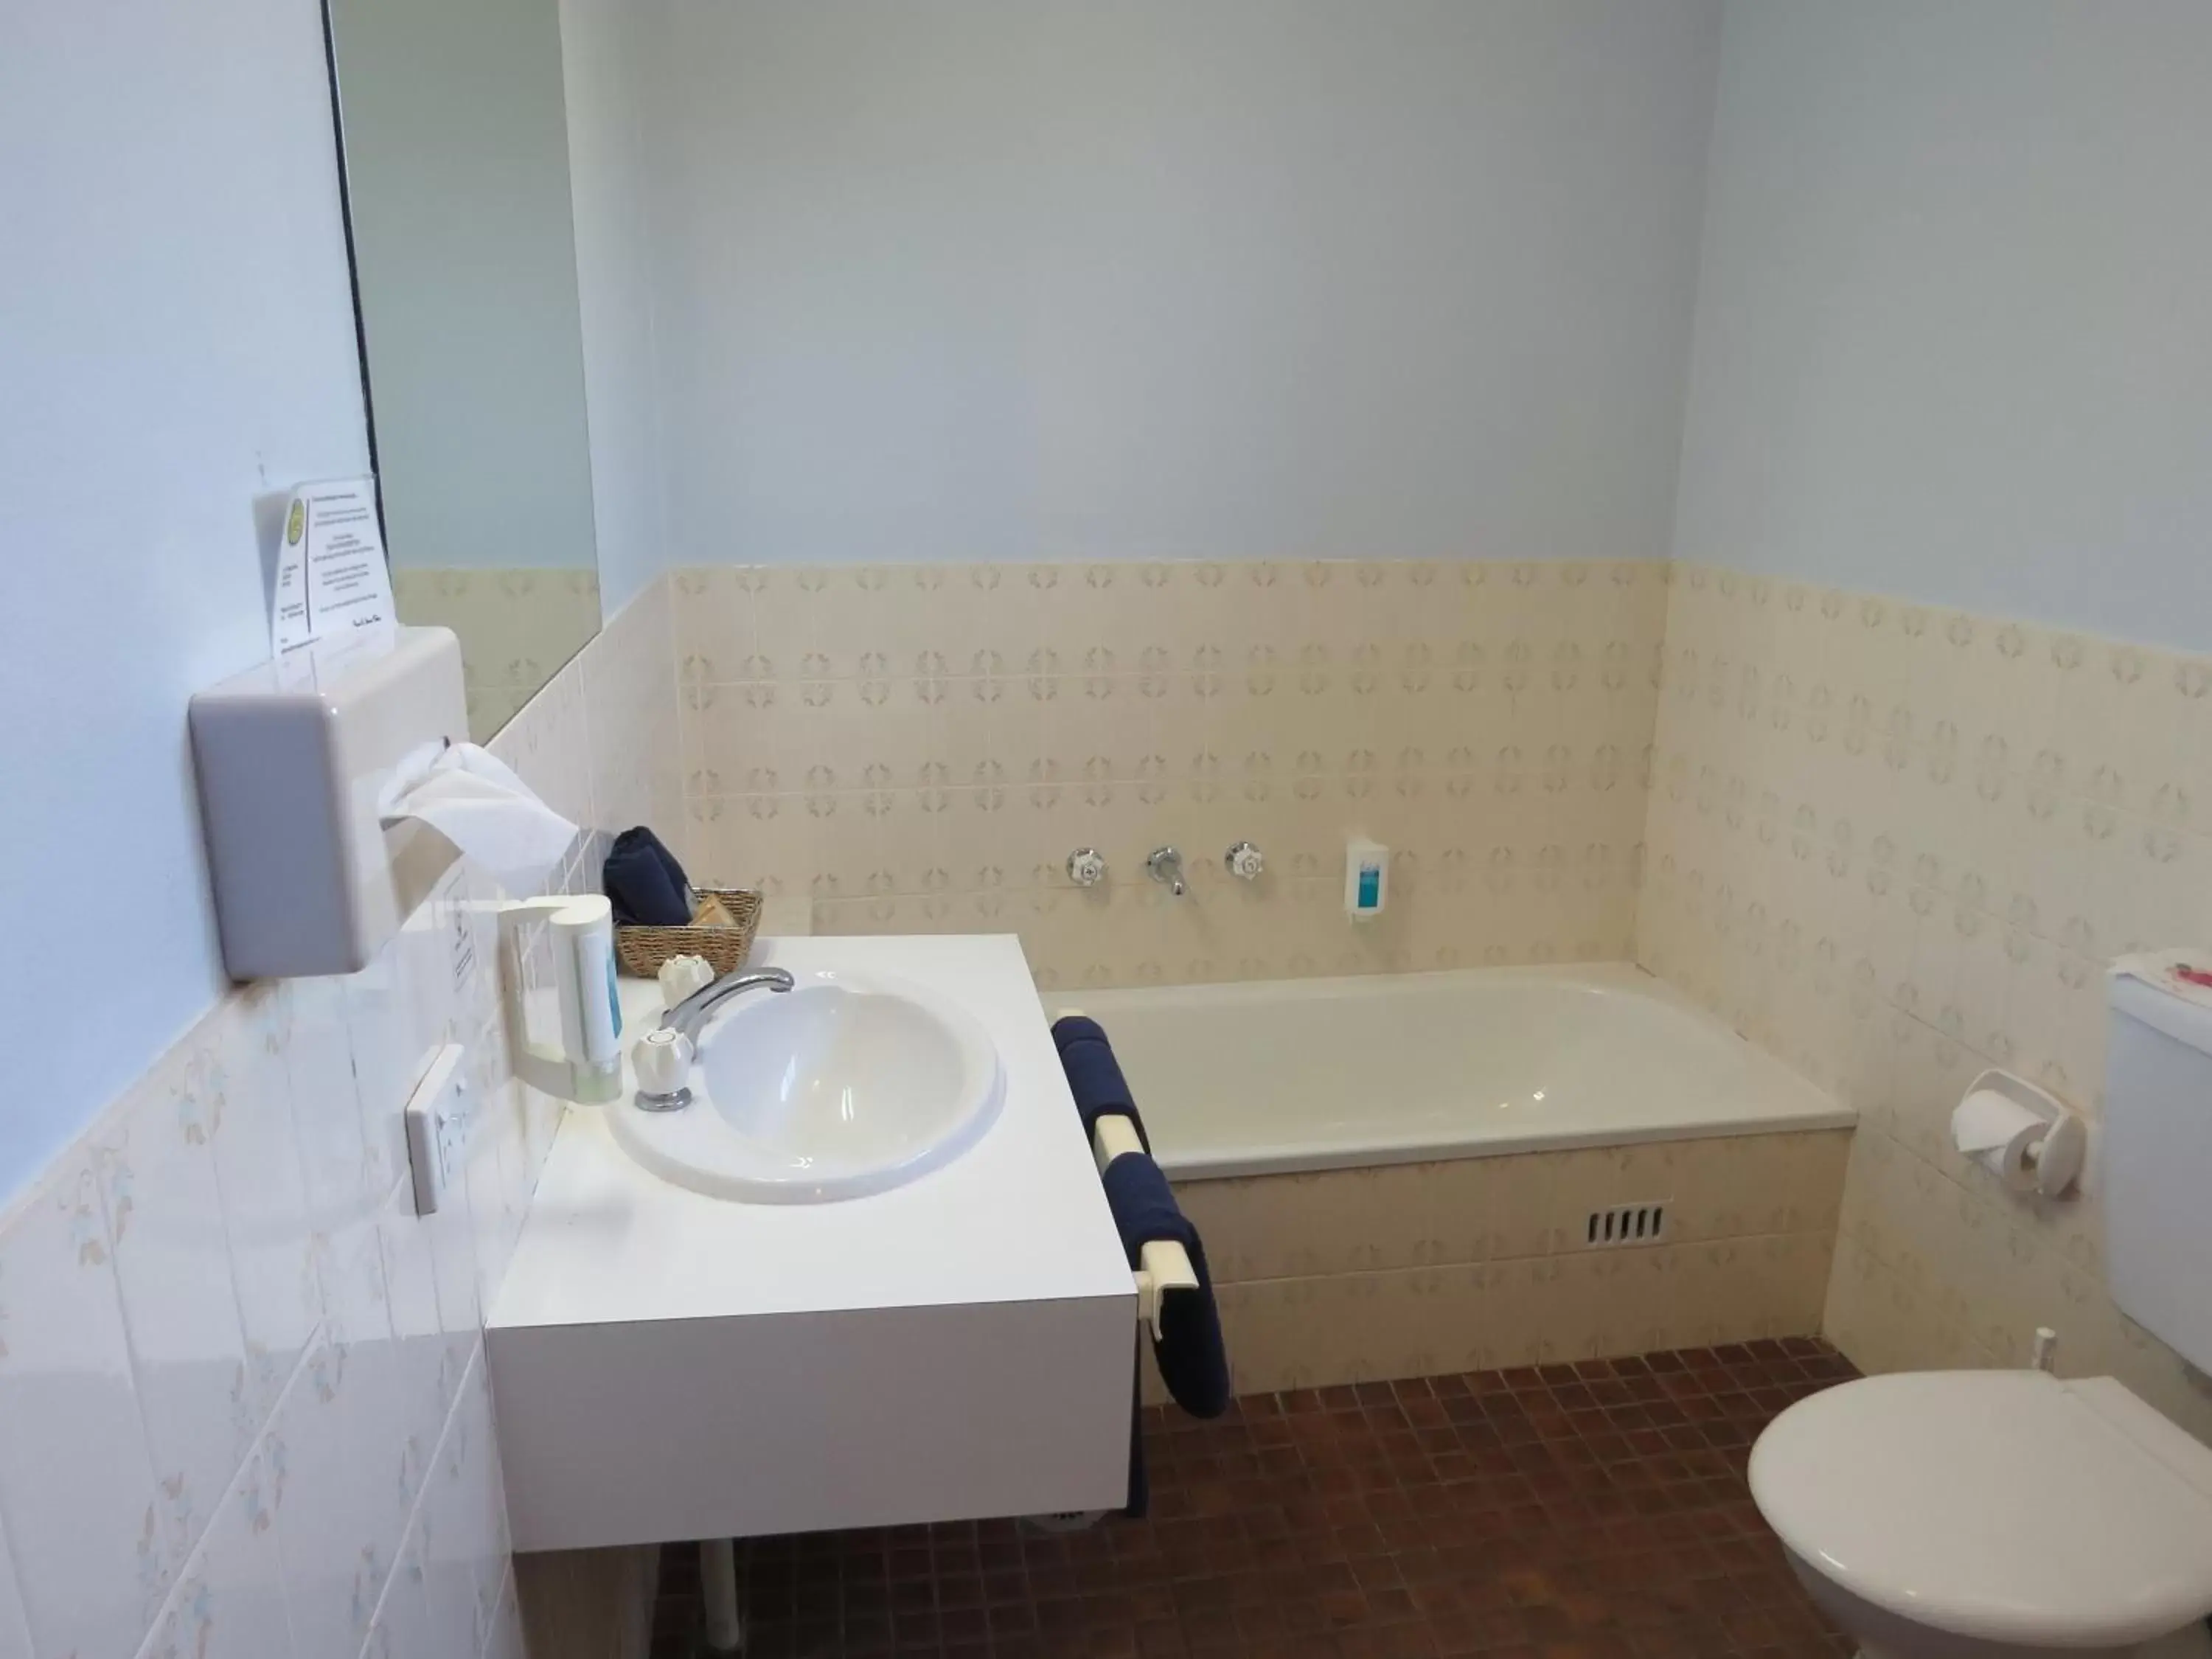 Bathroom in Albury Classic Motor Inn